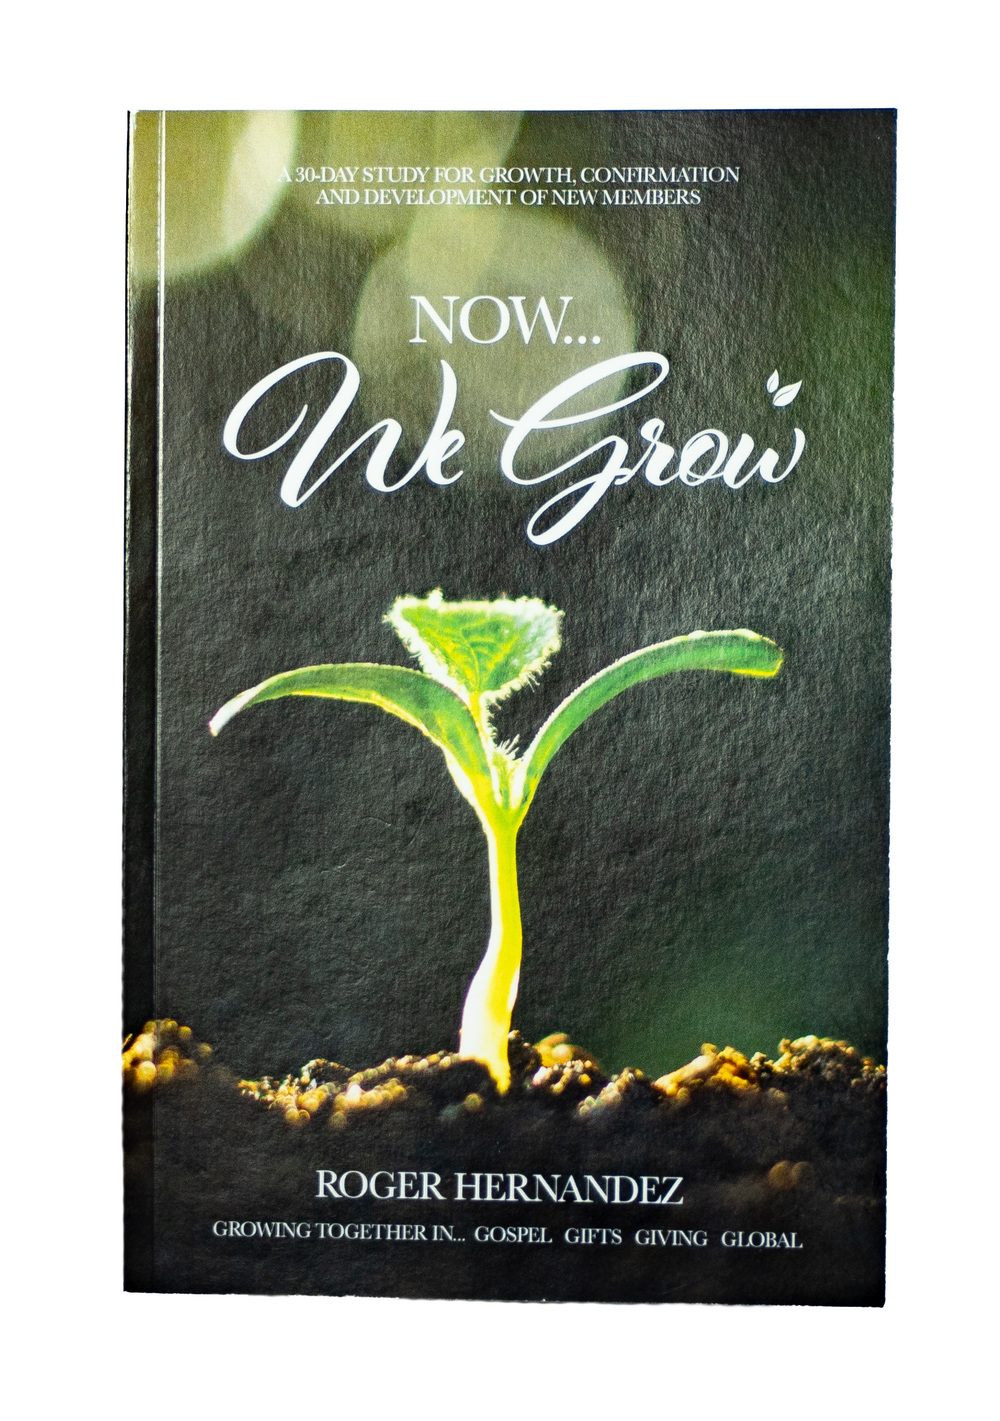 Now... We Grow